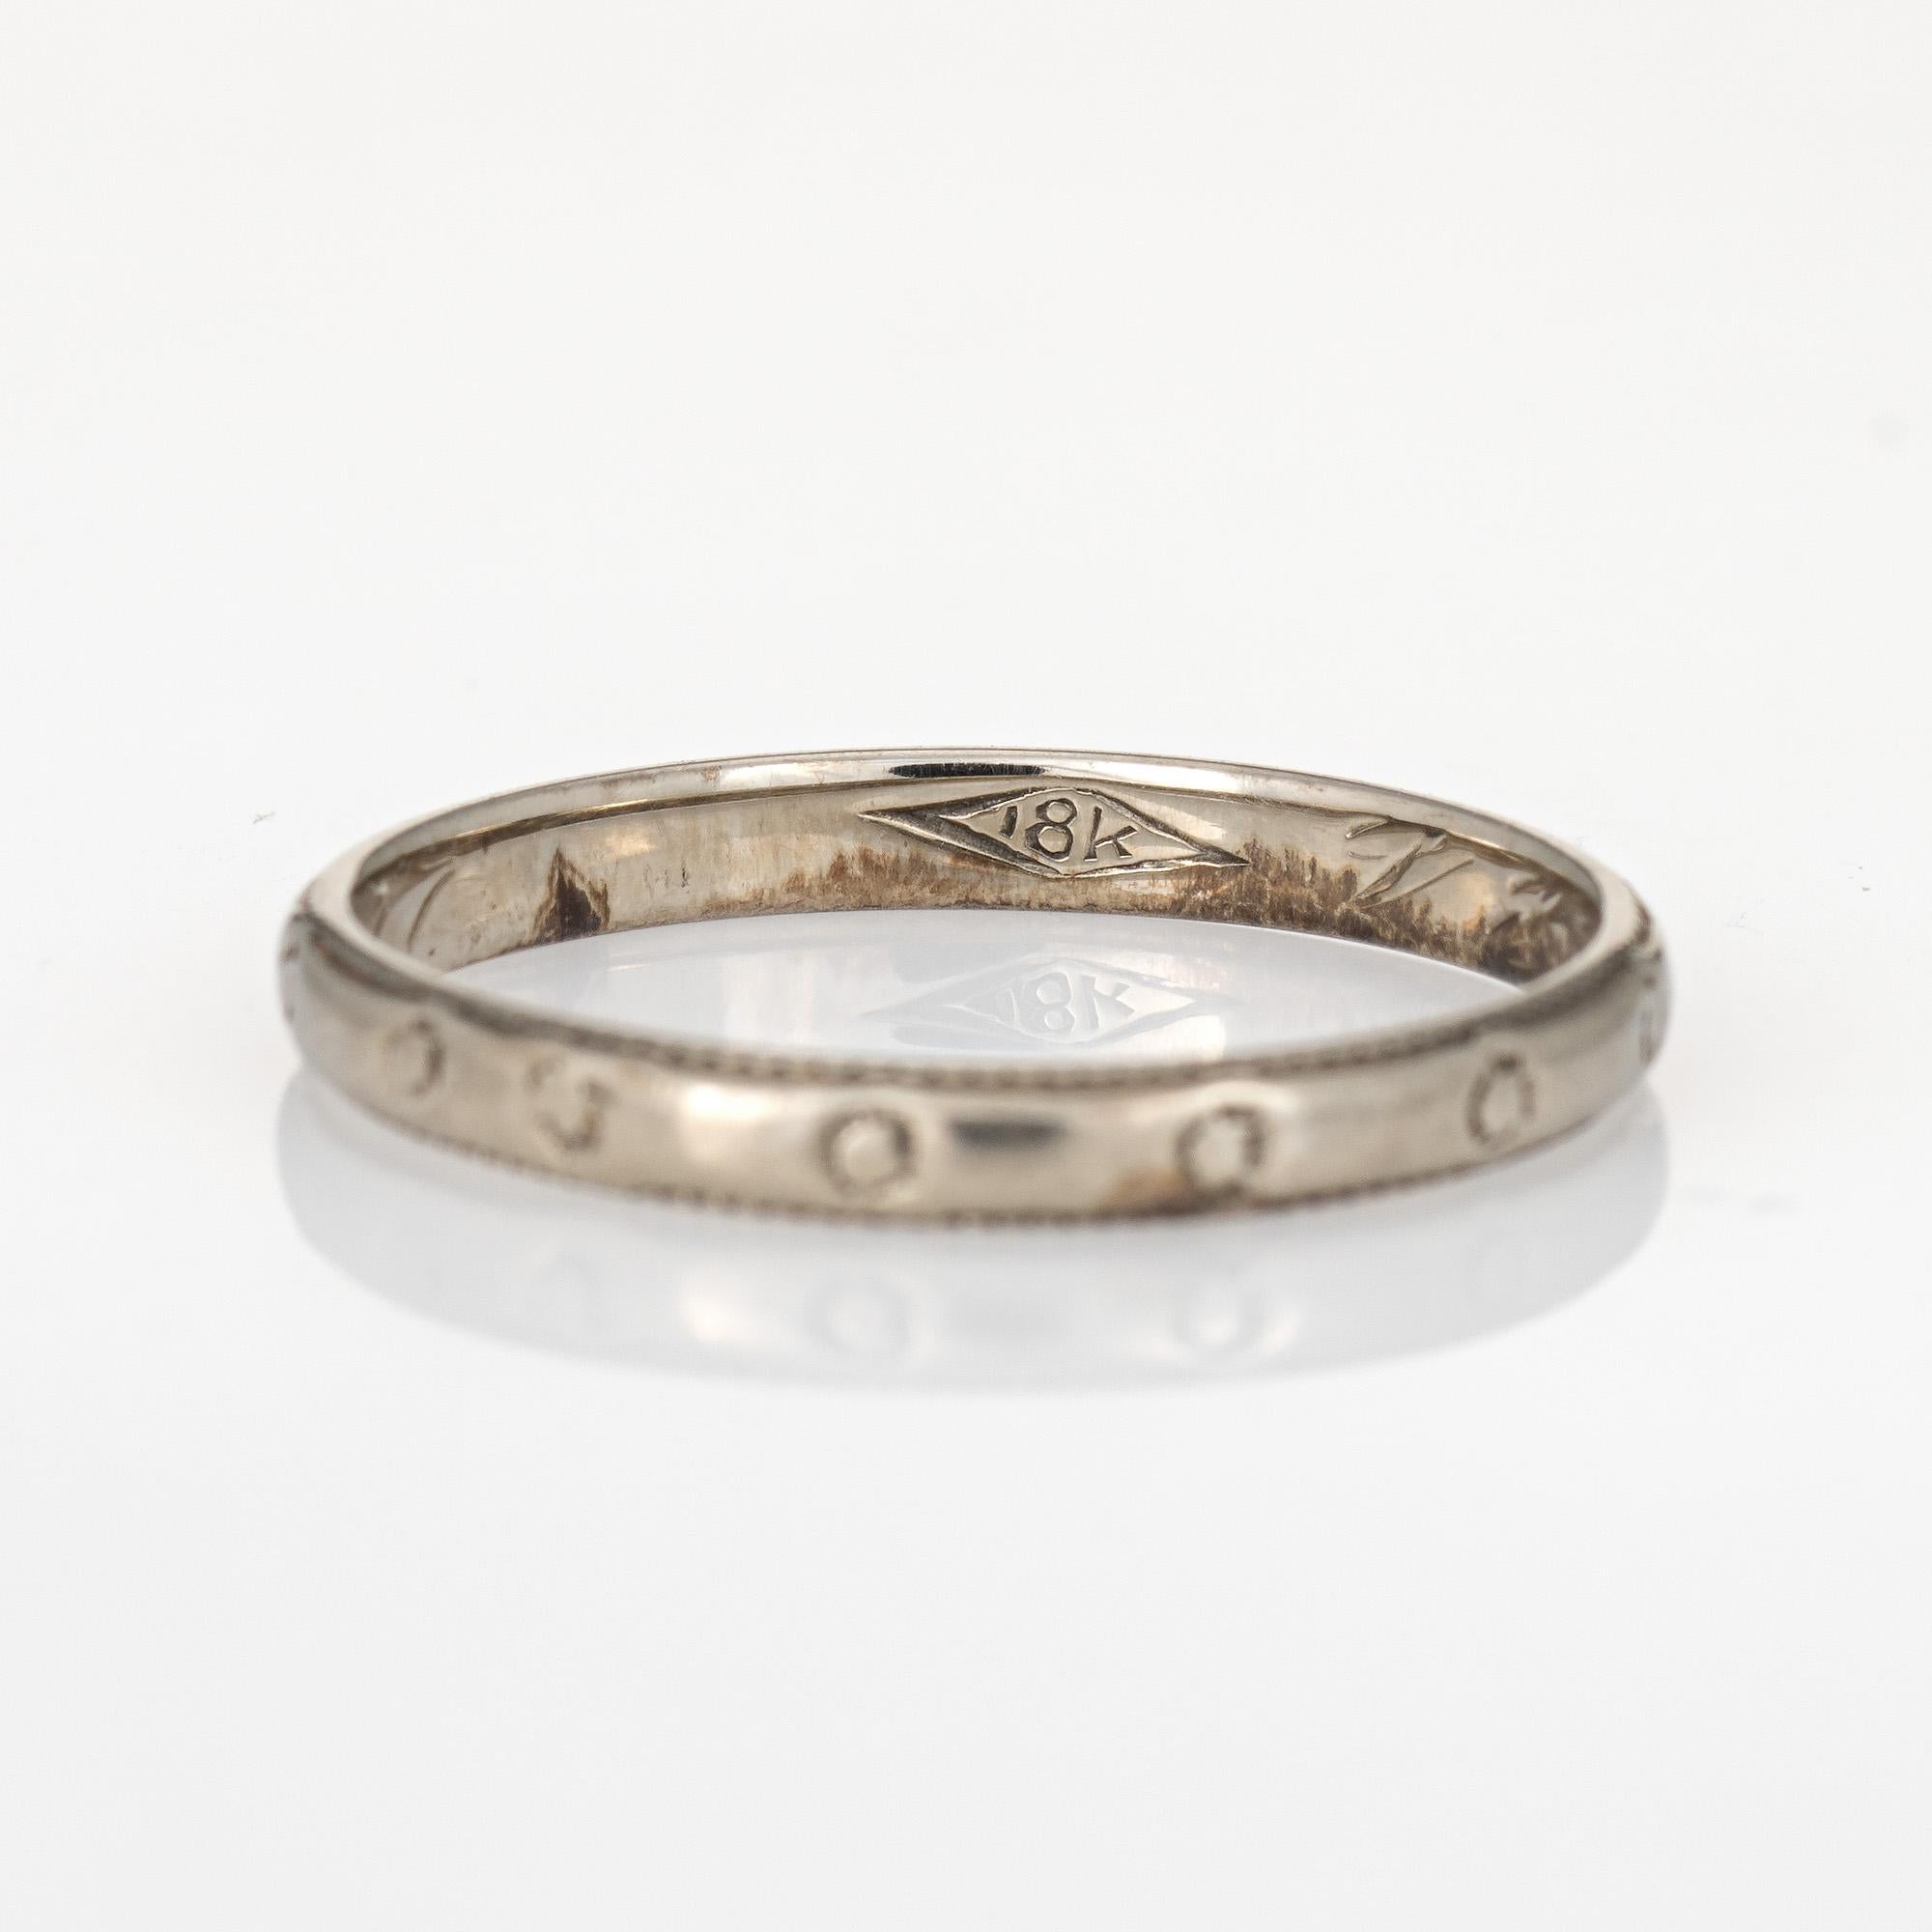 Vintage Art Deco Wedding Band 18k White Gold Ring Estate Fine Jewelry 1